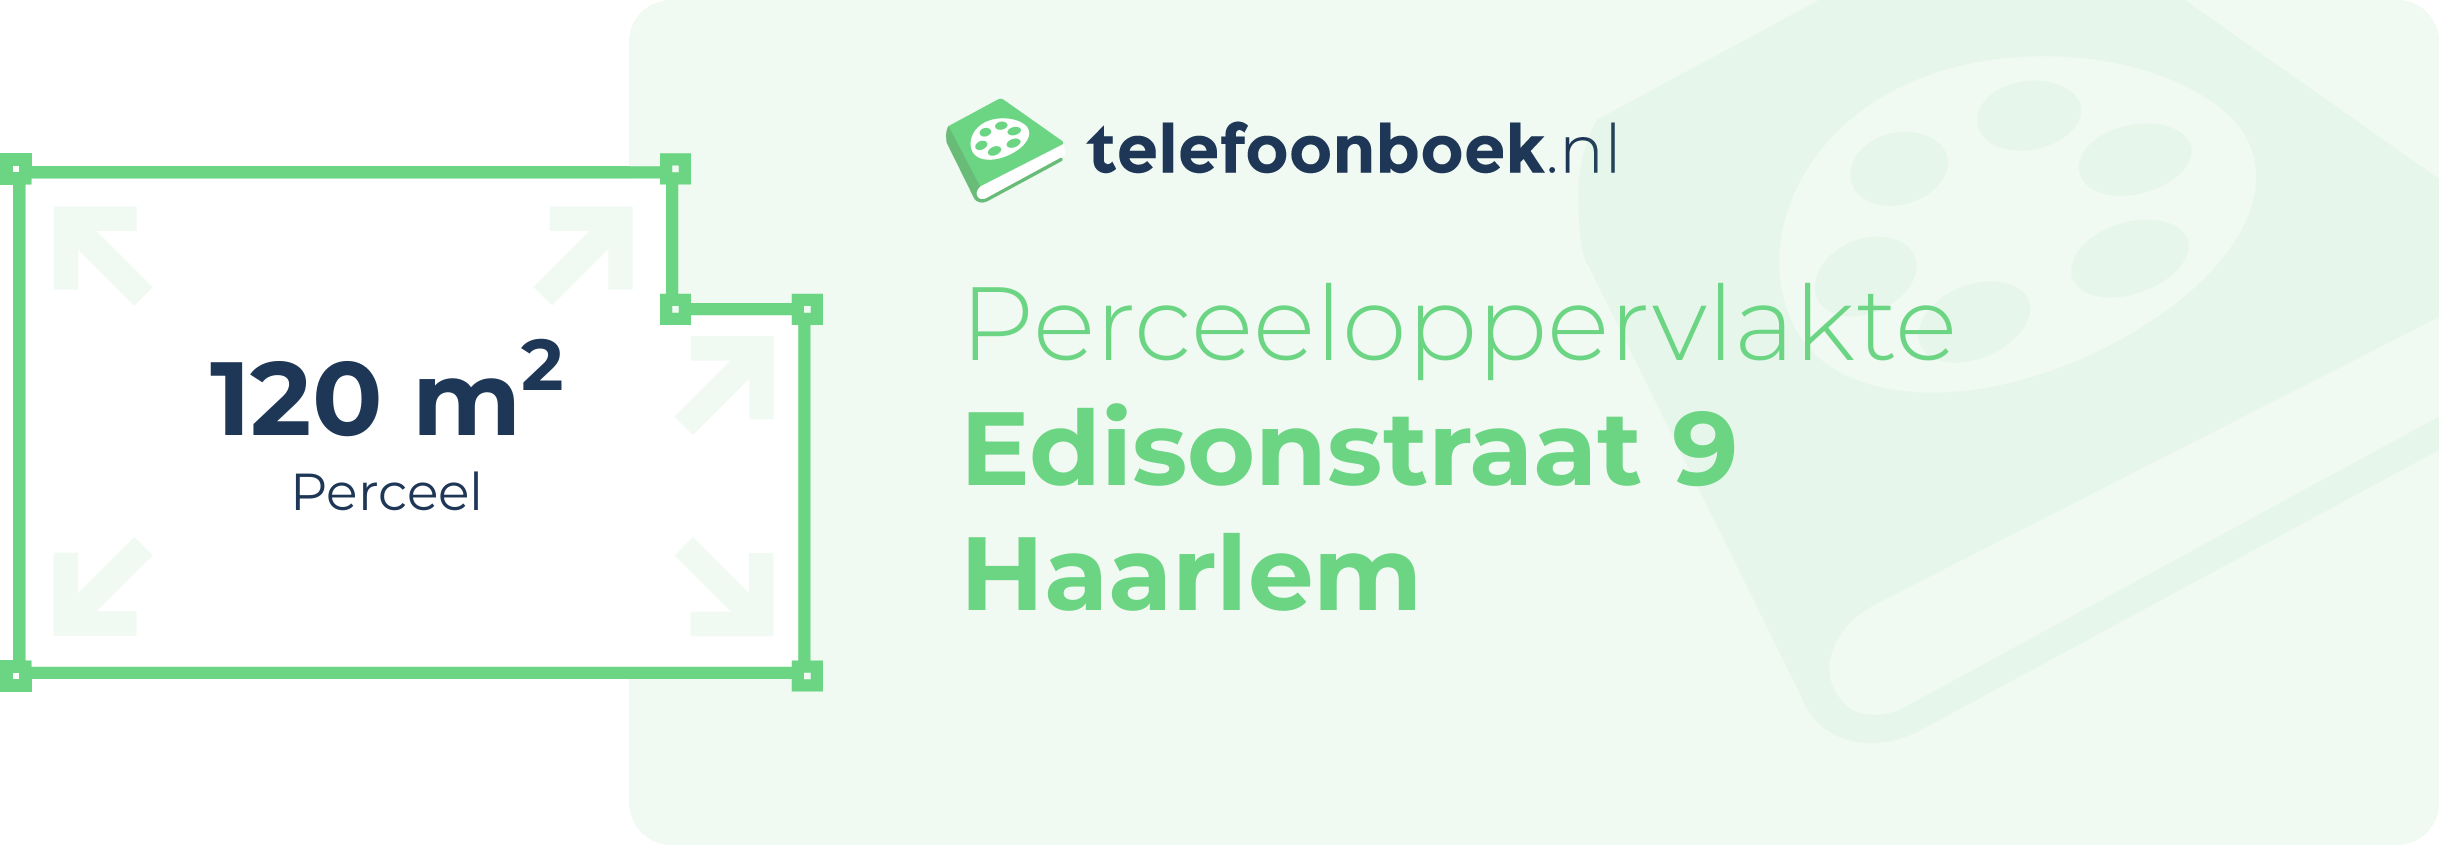 Perceeloppervlakte Edisonstraat 9 Haarlem